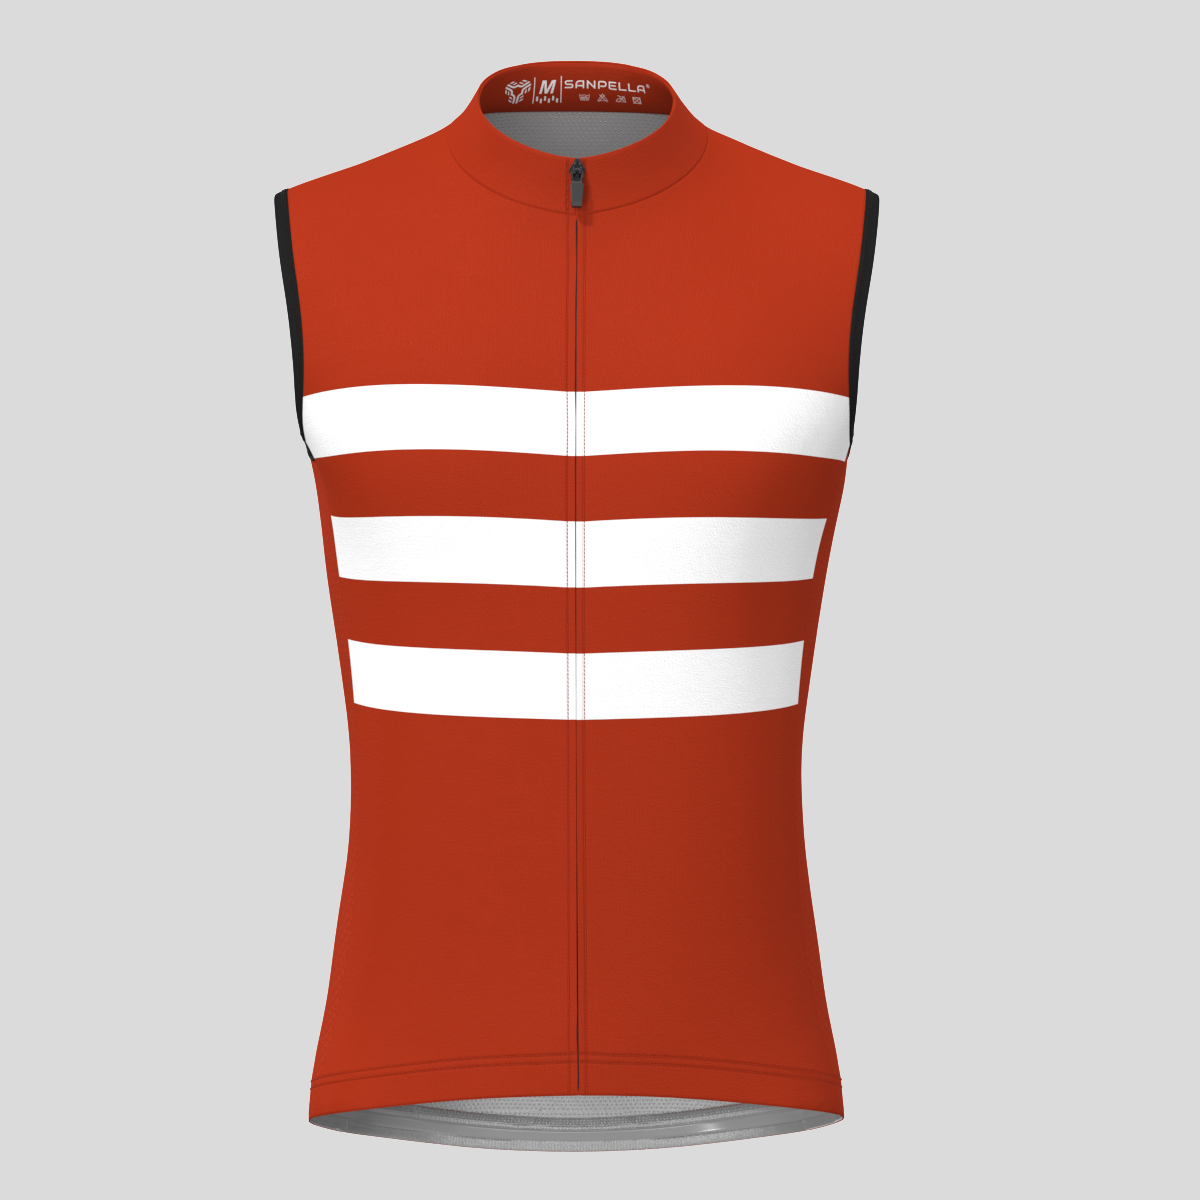 Men's Classic Stripes Sleeveless Cycling Jersey - Brick